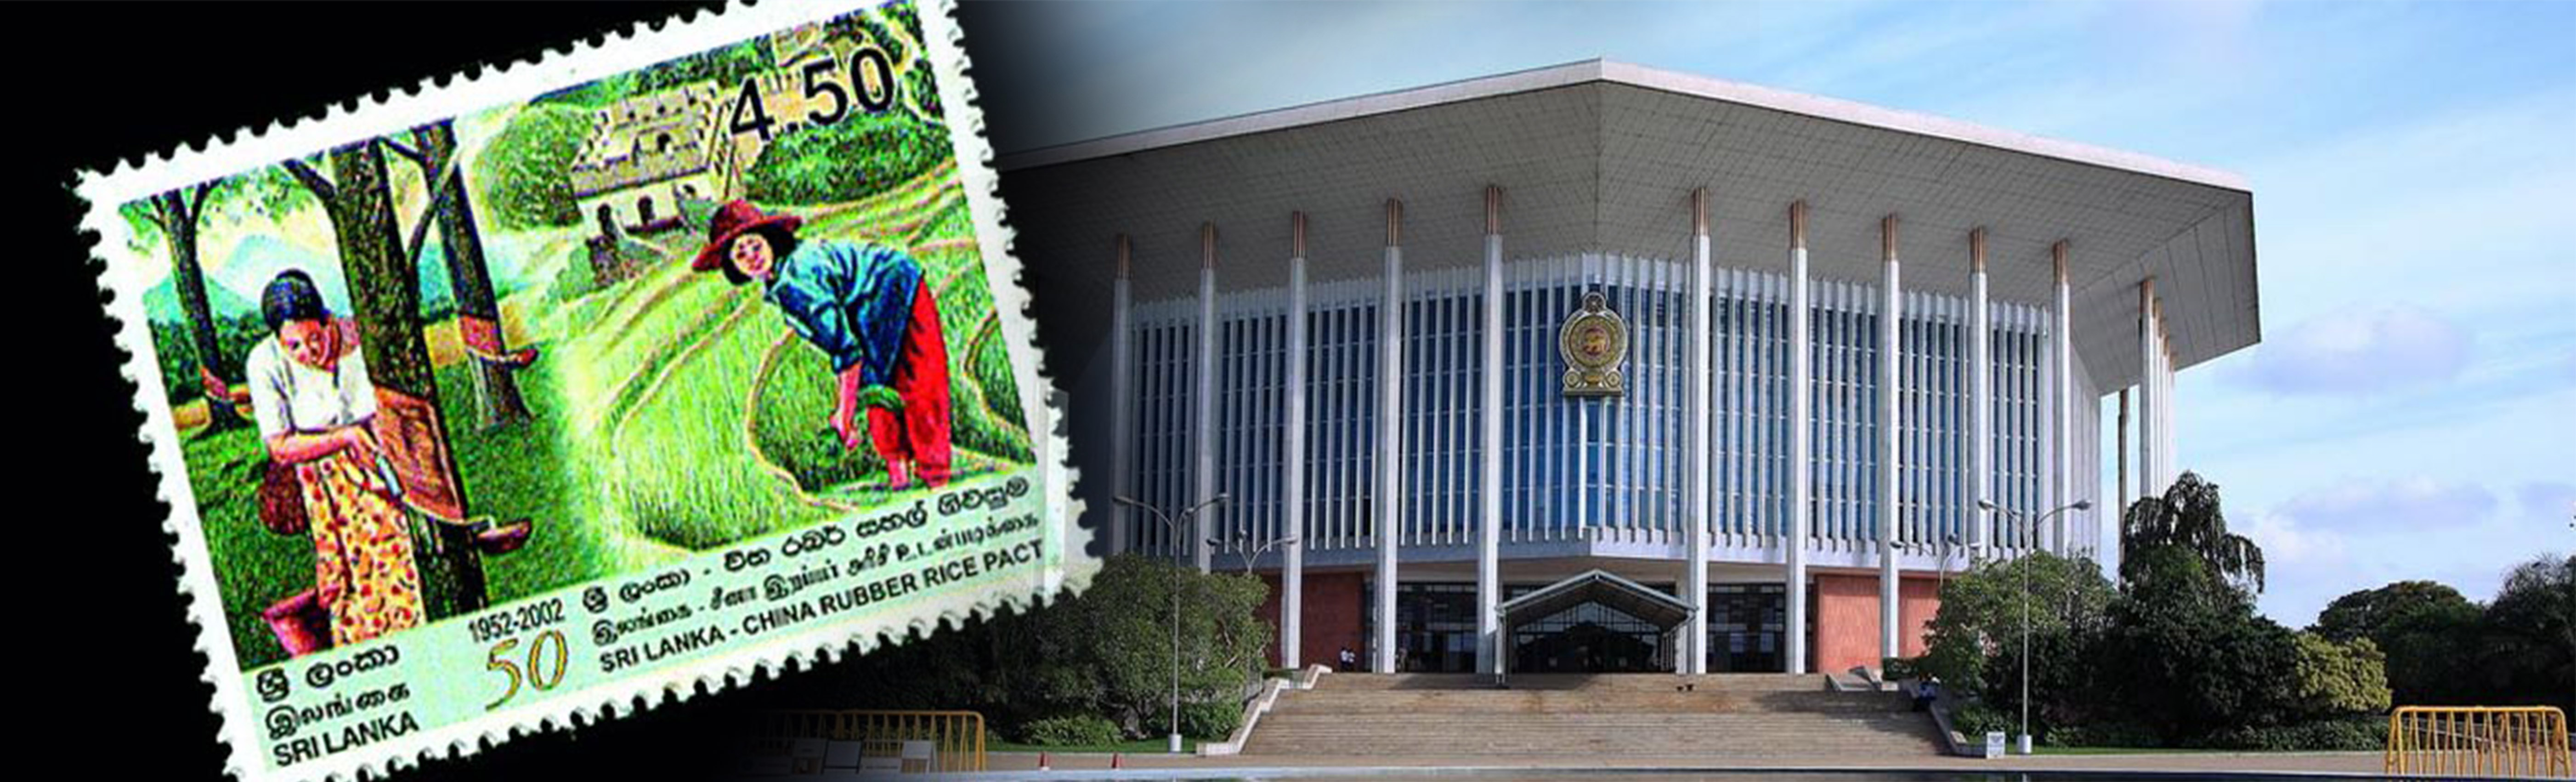 班达拉奈克国际会议大厦 班达拉奈克国际会议大厦就是中国与兰卡友谊的象征。1973年建造的这座大厦是中华人民共和国送给兰卡的一件礼物之一。这座大厦在兰卡Mrs.Srimavo R.D.Bandaranayake当过总理时（1972-1977）为了想念斯里兰卡的第四位名总理Mr.S.W.R.D.Bandaranayake(1956-1959)建造的。  Bandaranayake Memorial International Conference Hall (BITCH) , us one of the main symbols of representing the friendship of China and Sri lanka. The Conference Hall was built in 1973 the period of Prime Minister Mrs. Sirimavo Bandaranayake (1972-1977).  It was a gift from the government of People's Republic of China in memory of Mr.S.W.R.D. Bandanayake, Prime Minister of Sri Lanka from 1956 to 1959.